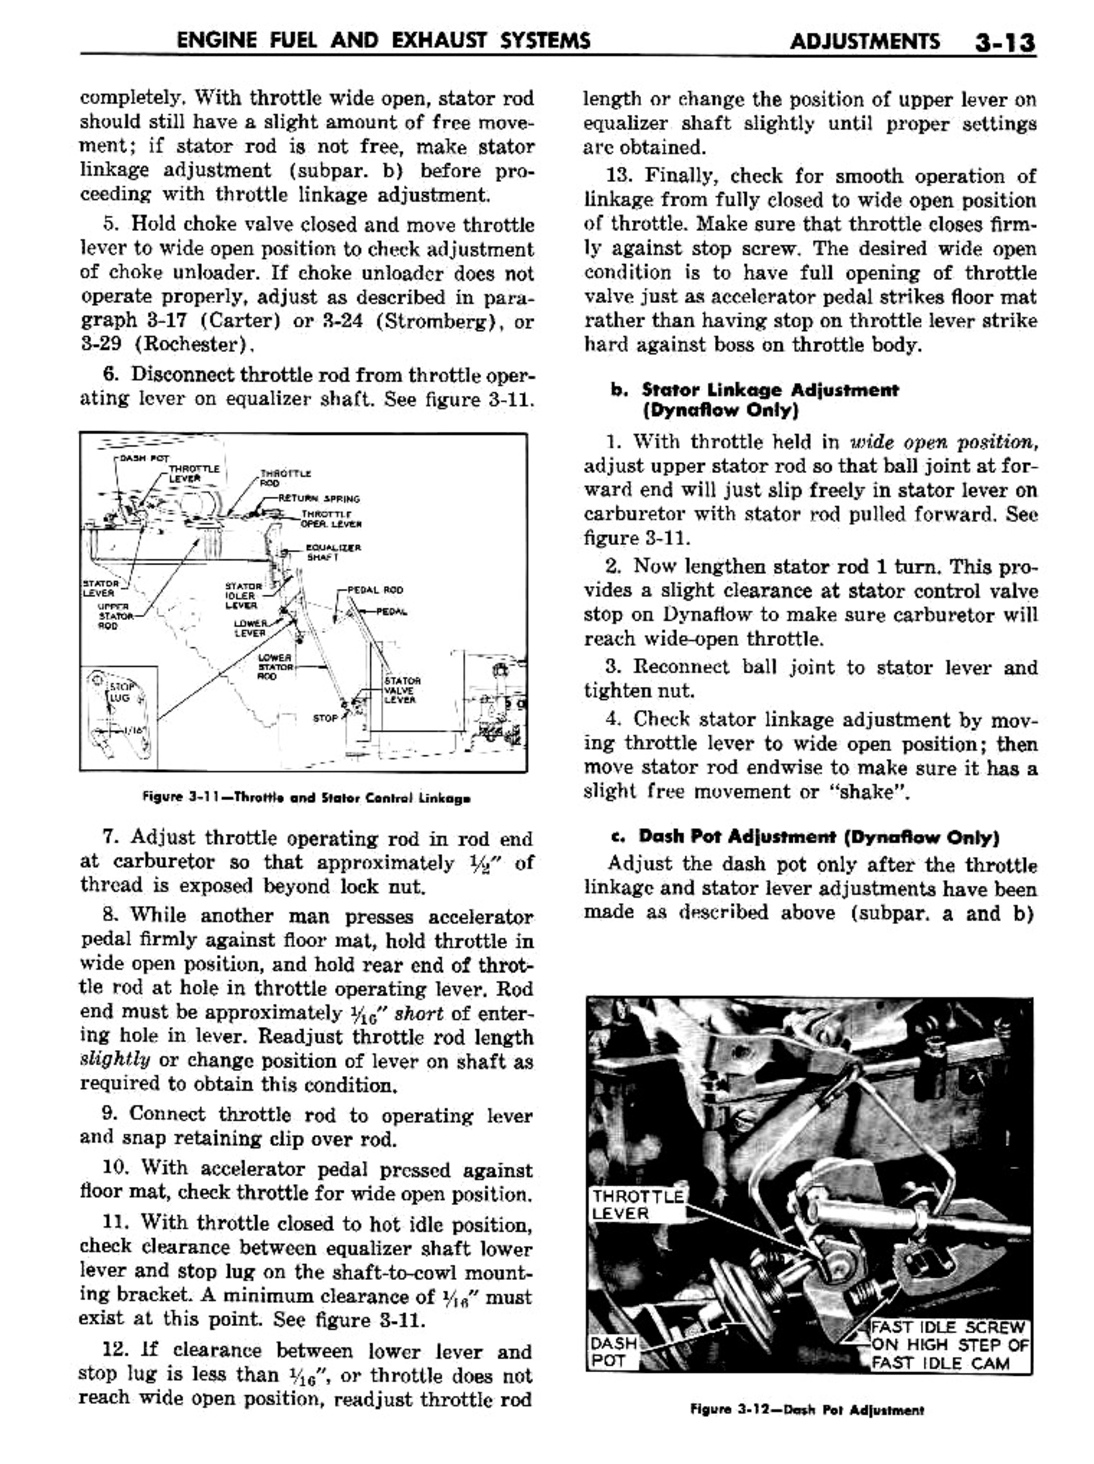 n_04 1957 Buick Shop Manual - Engine Fuel & Exhaust-013-013.jpg